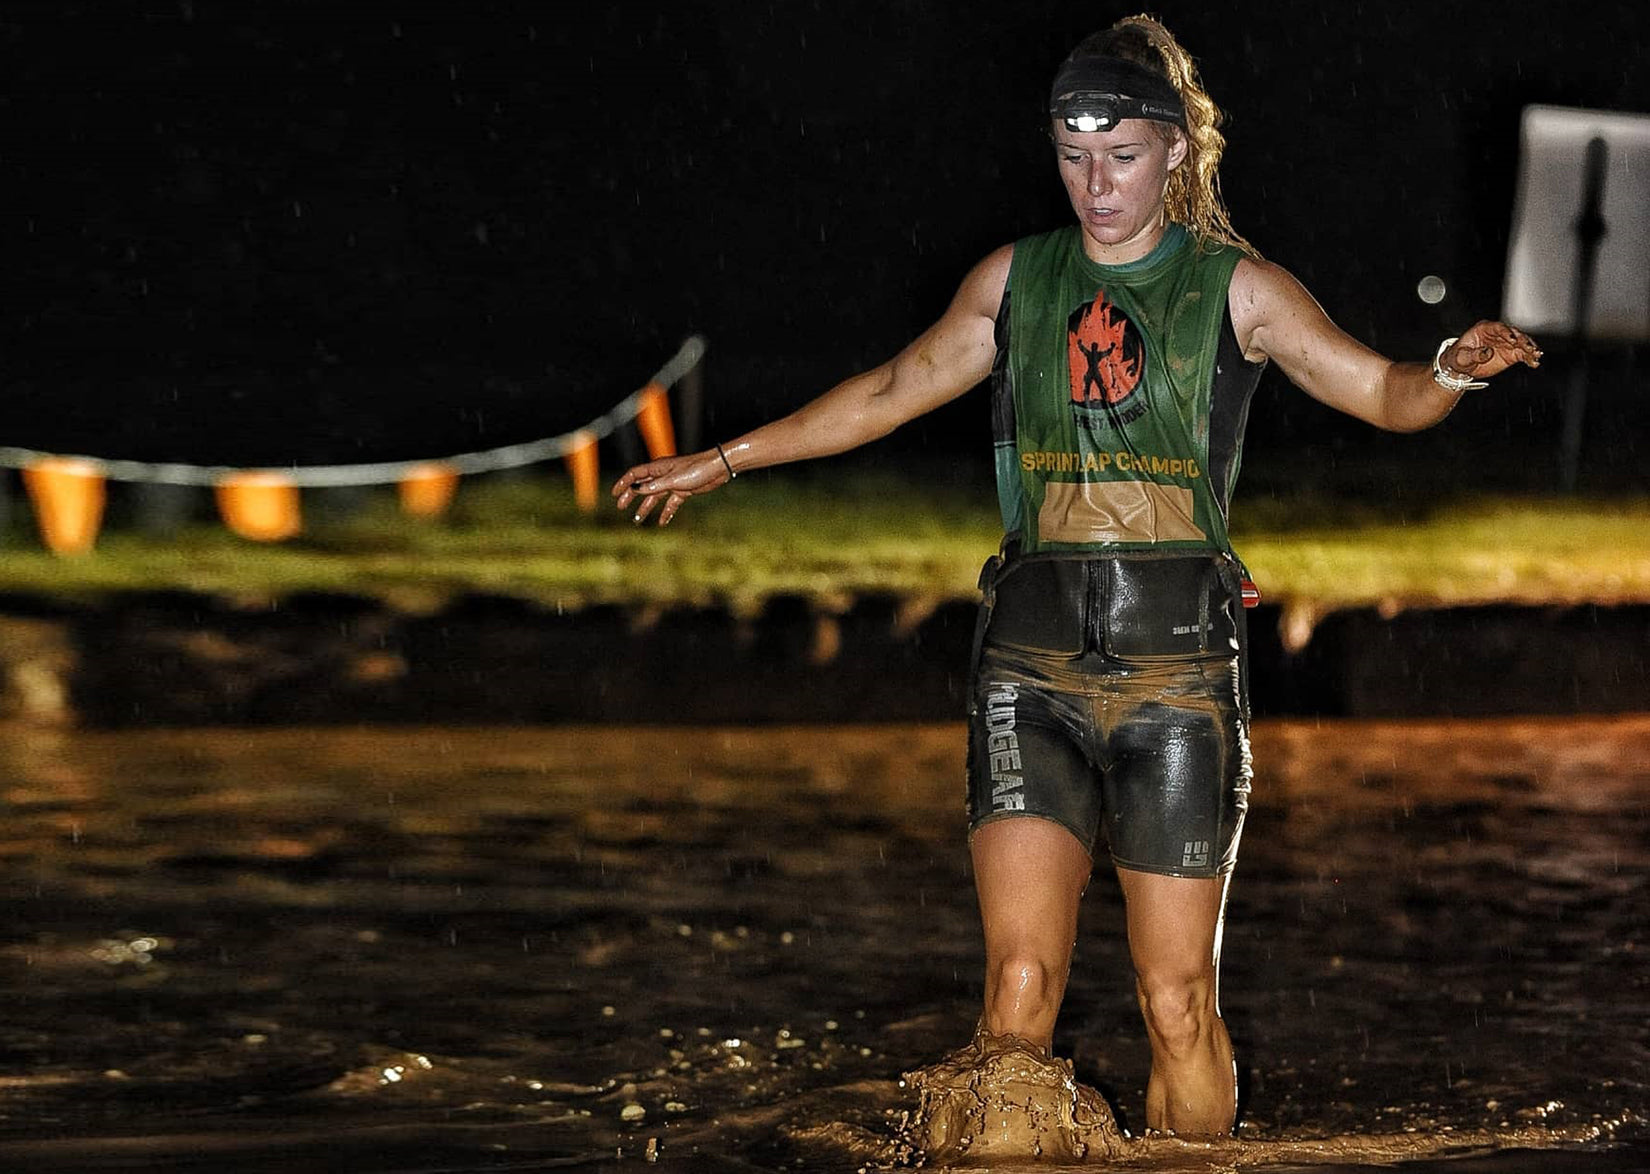 Things get messy during Israel's annual mud run